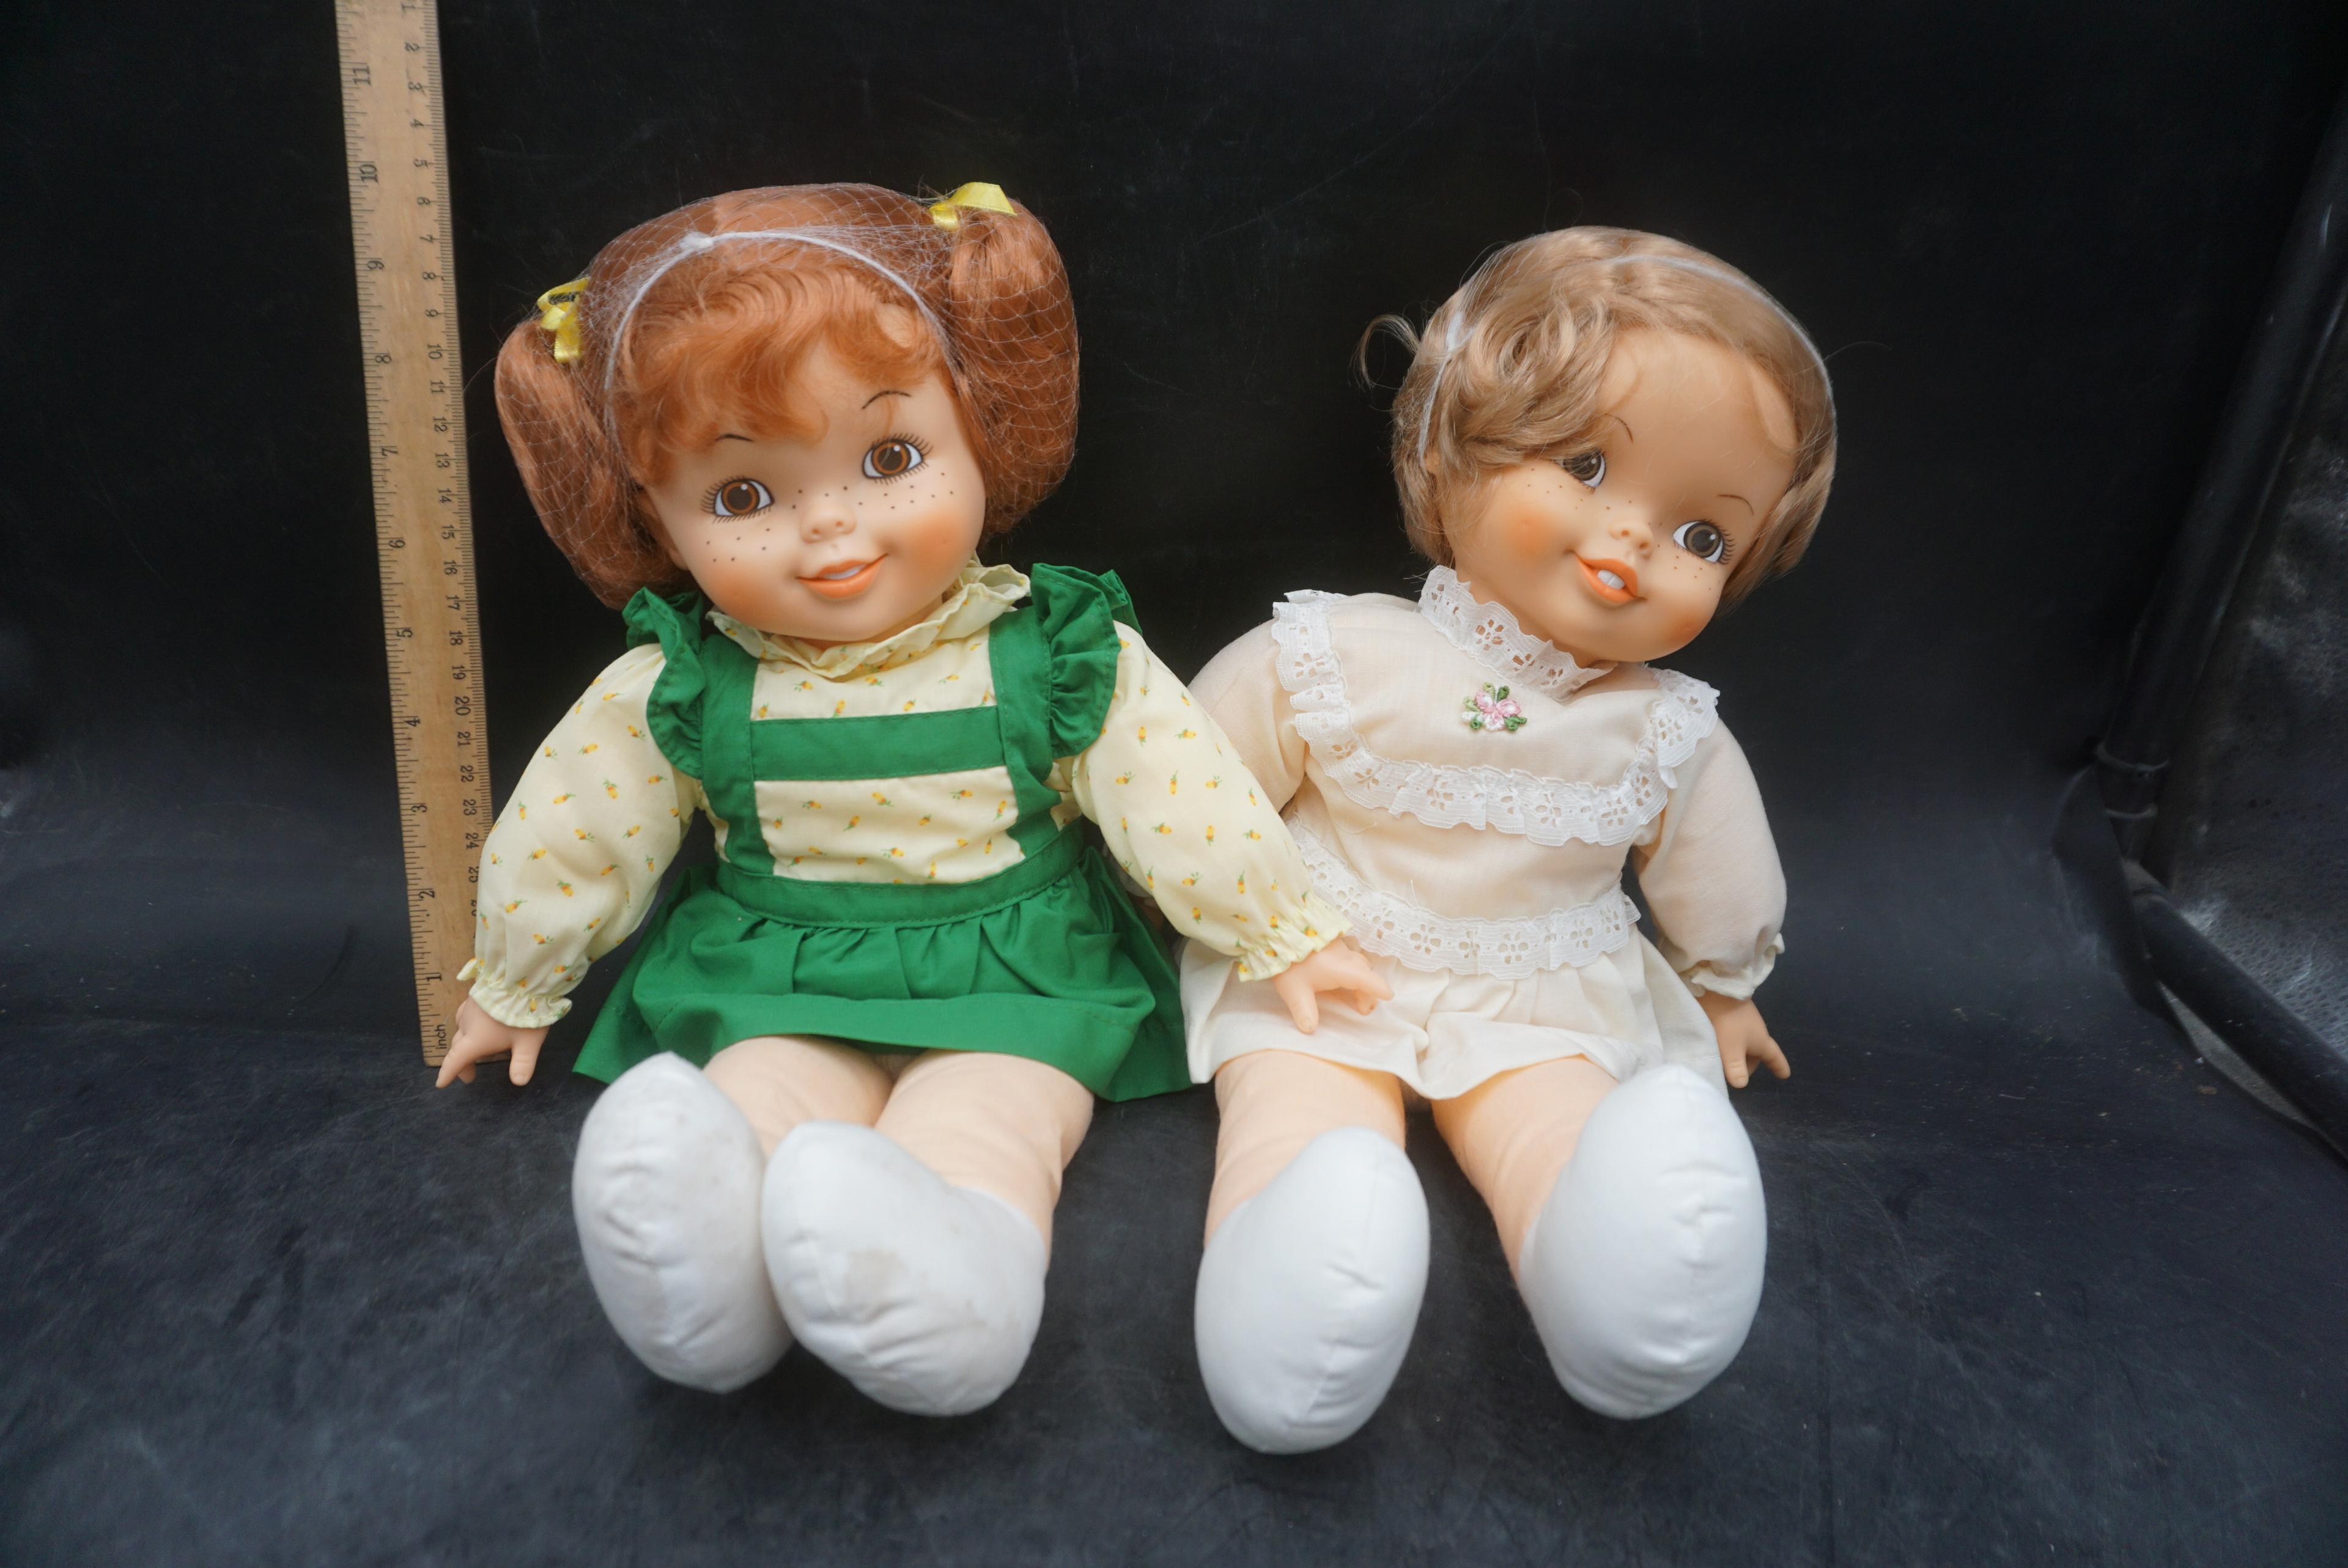 4 Dolls (1980 Northern Bath Tissue Advertising Dolls)